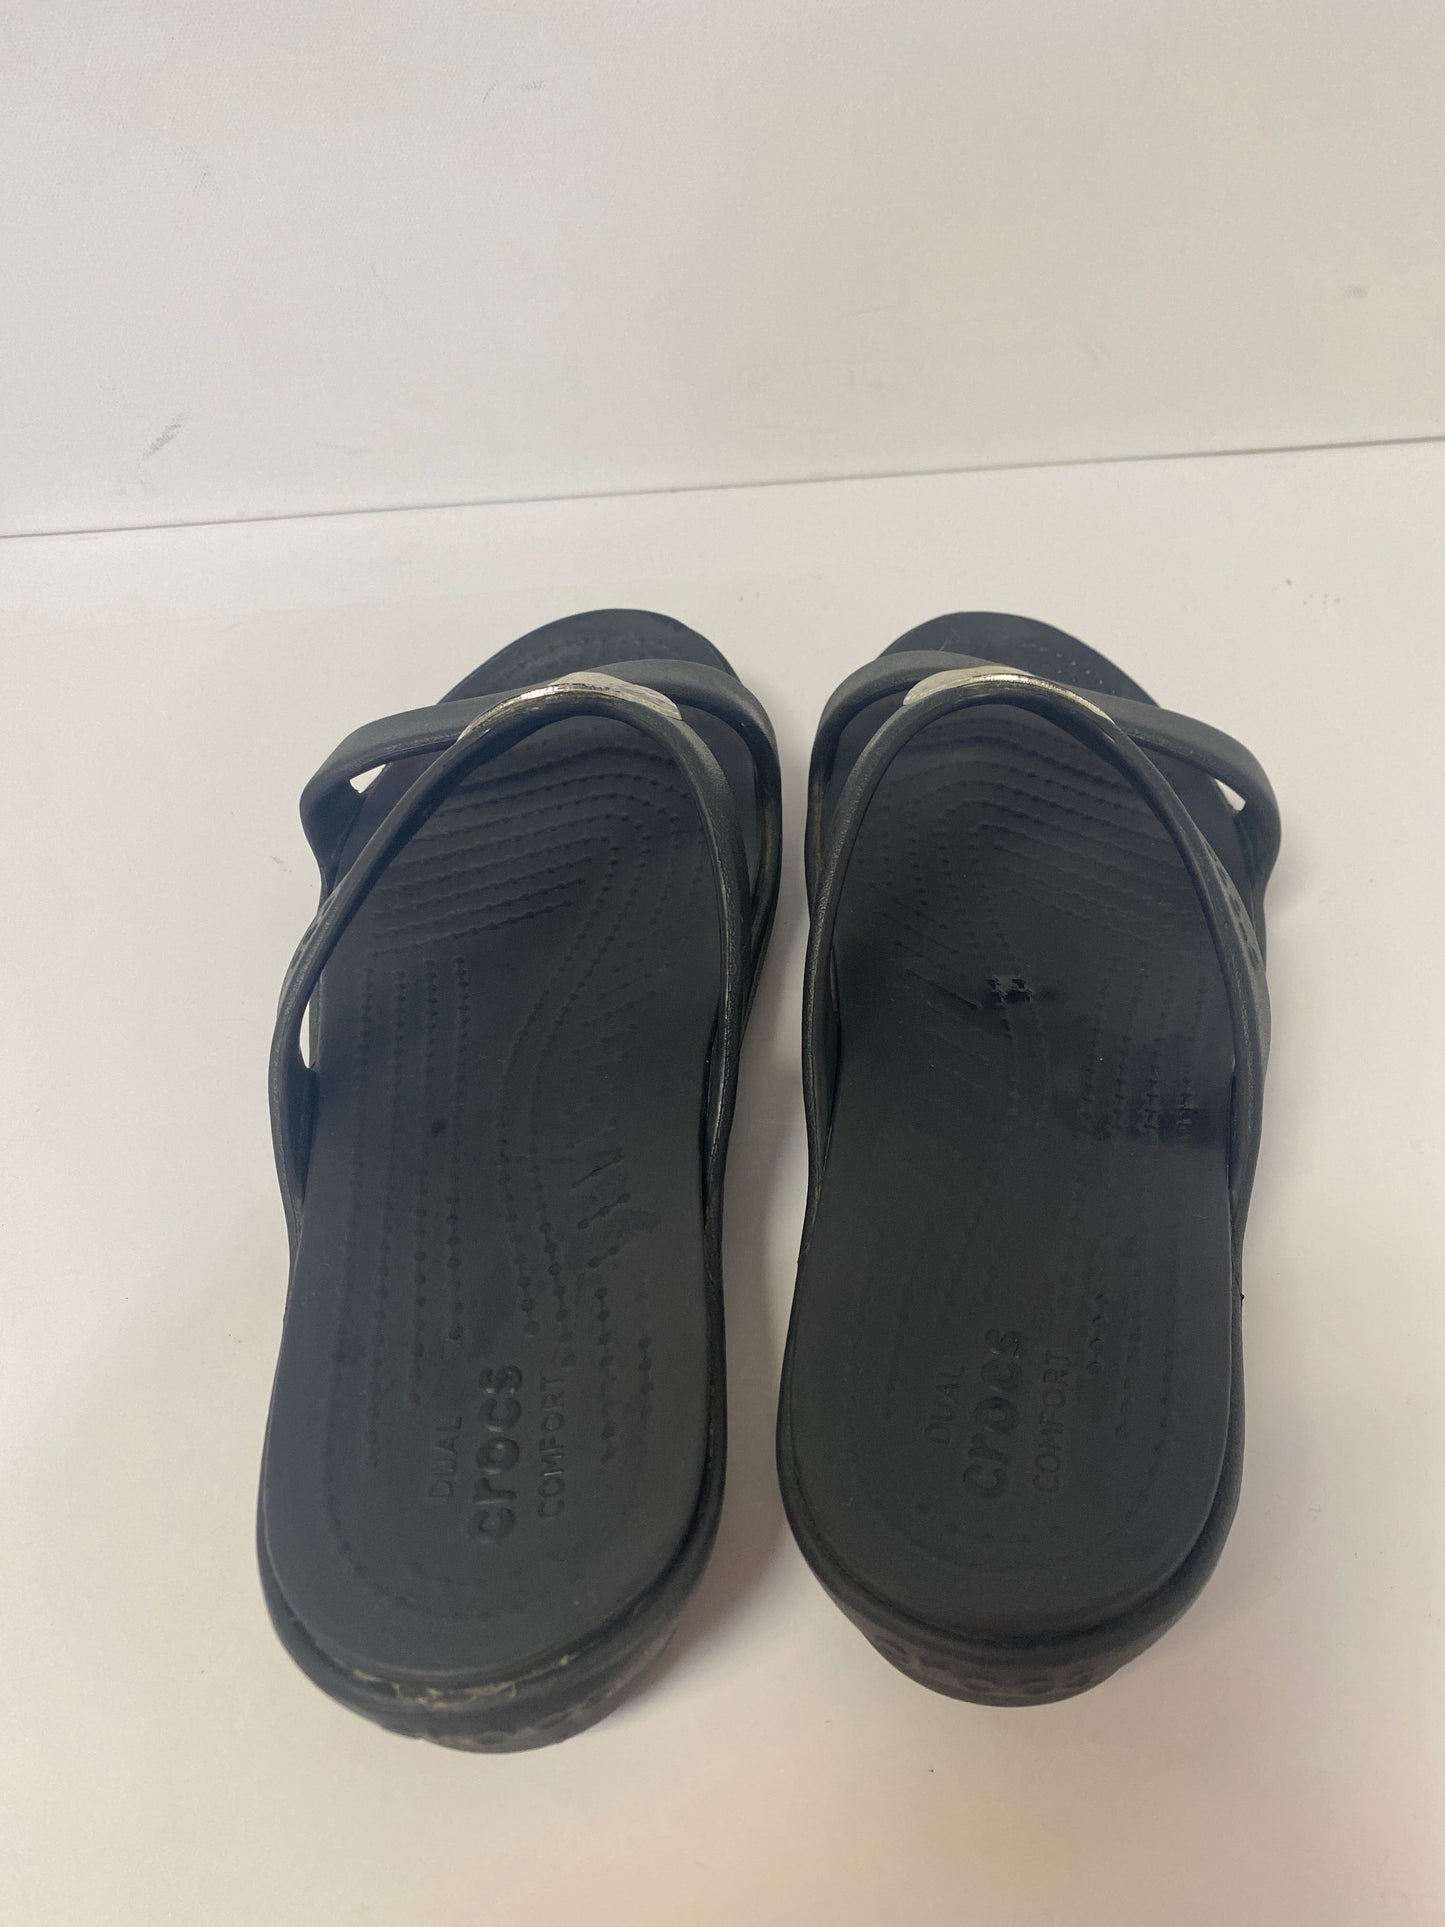 Blue Sandals Flats Crocs, Size 9